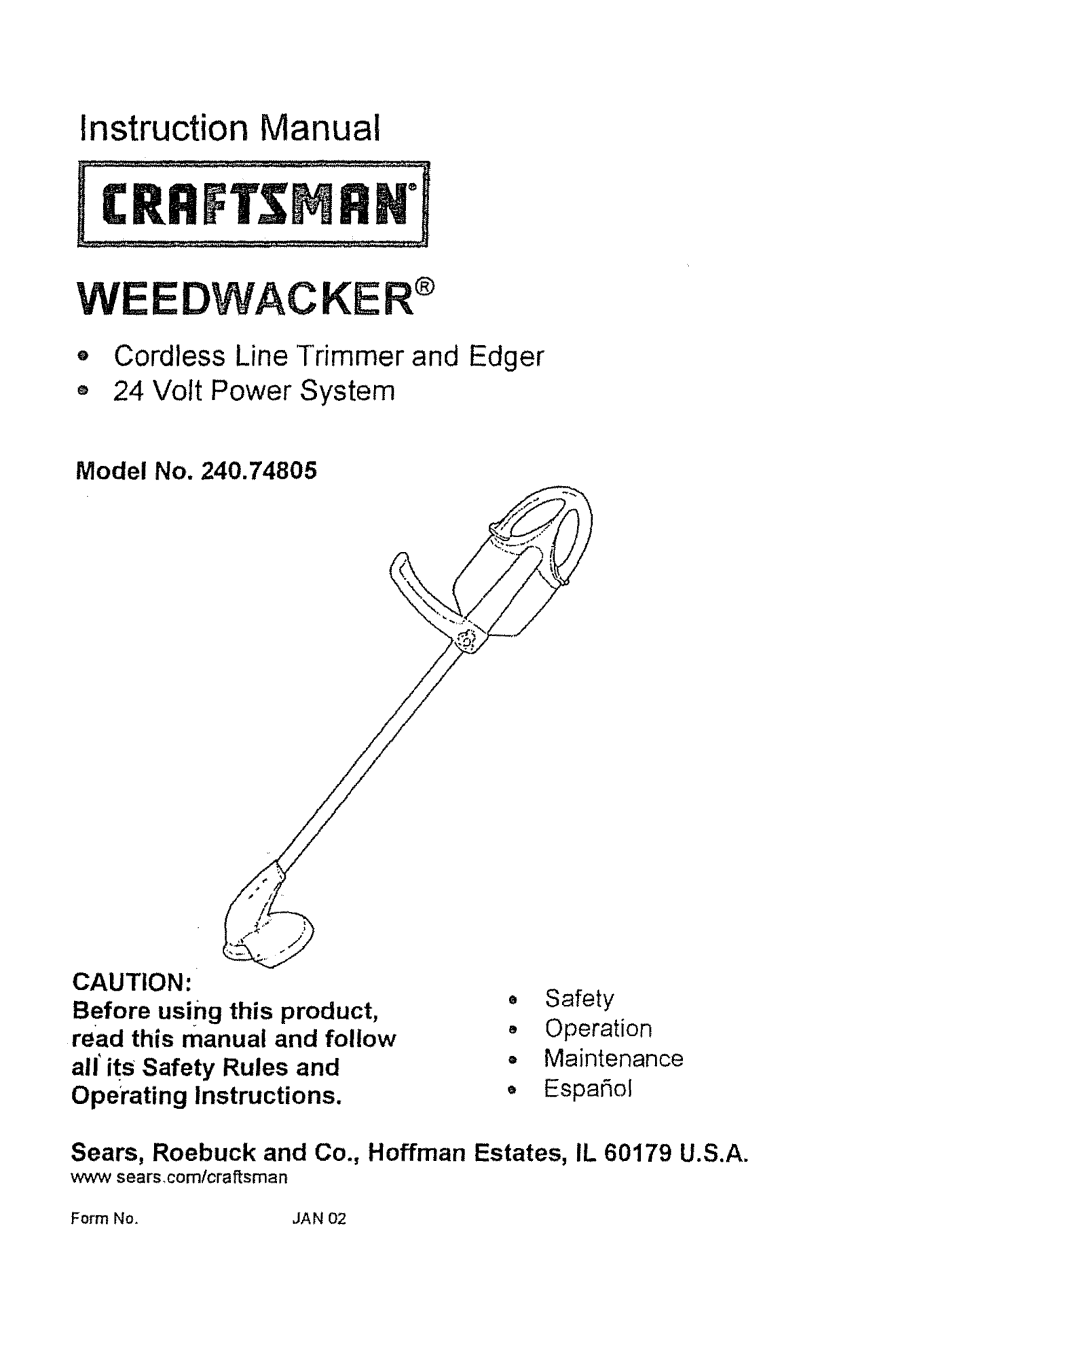 Craftsman 240.74805 instruction manual Edwacke, Model No, Before using, this product, Operation, allits Safety 